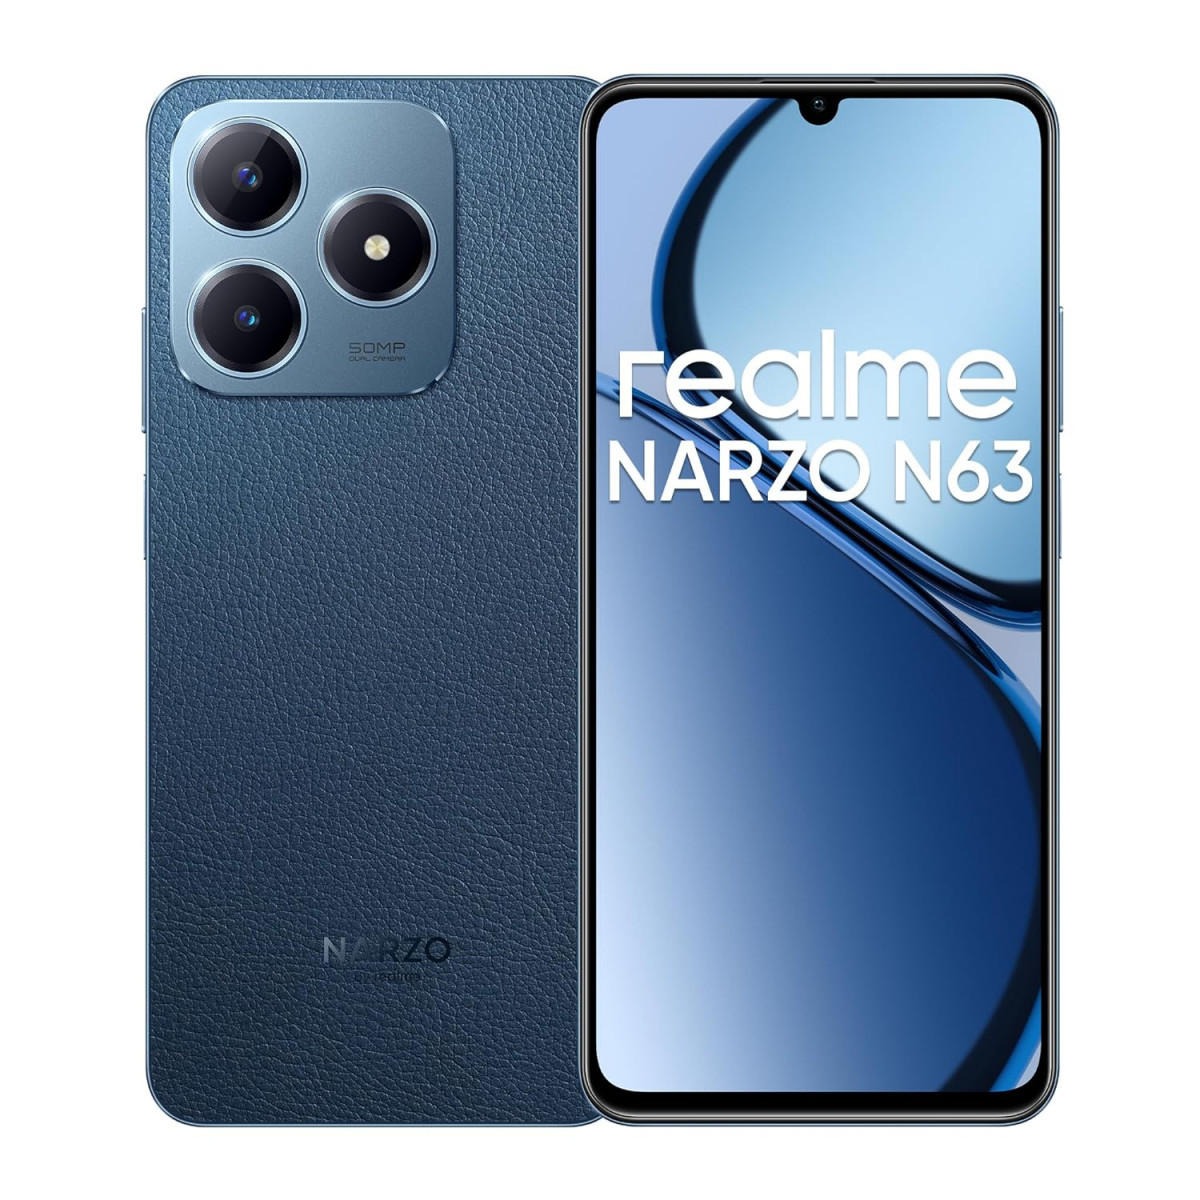 realme NARZO N63 Leather Blue 4GB RAM64GB Storage 45W Fast Charge  5000mAh Durable Battery  774mm Ultra Slim  50MP AI Camera  AI Boost